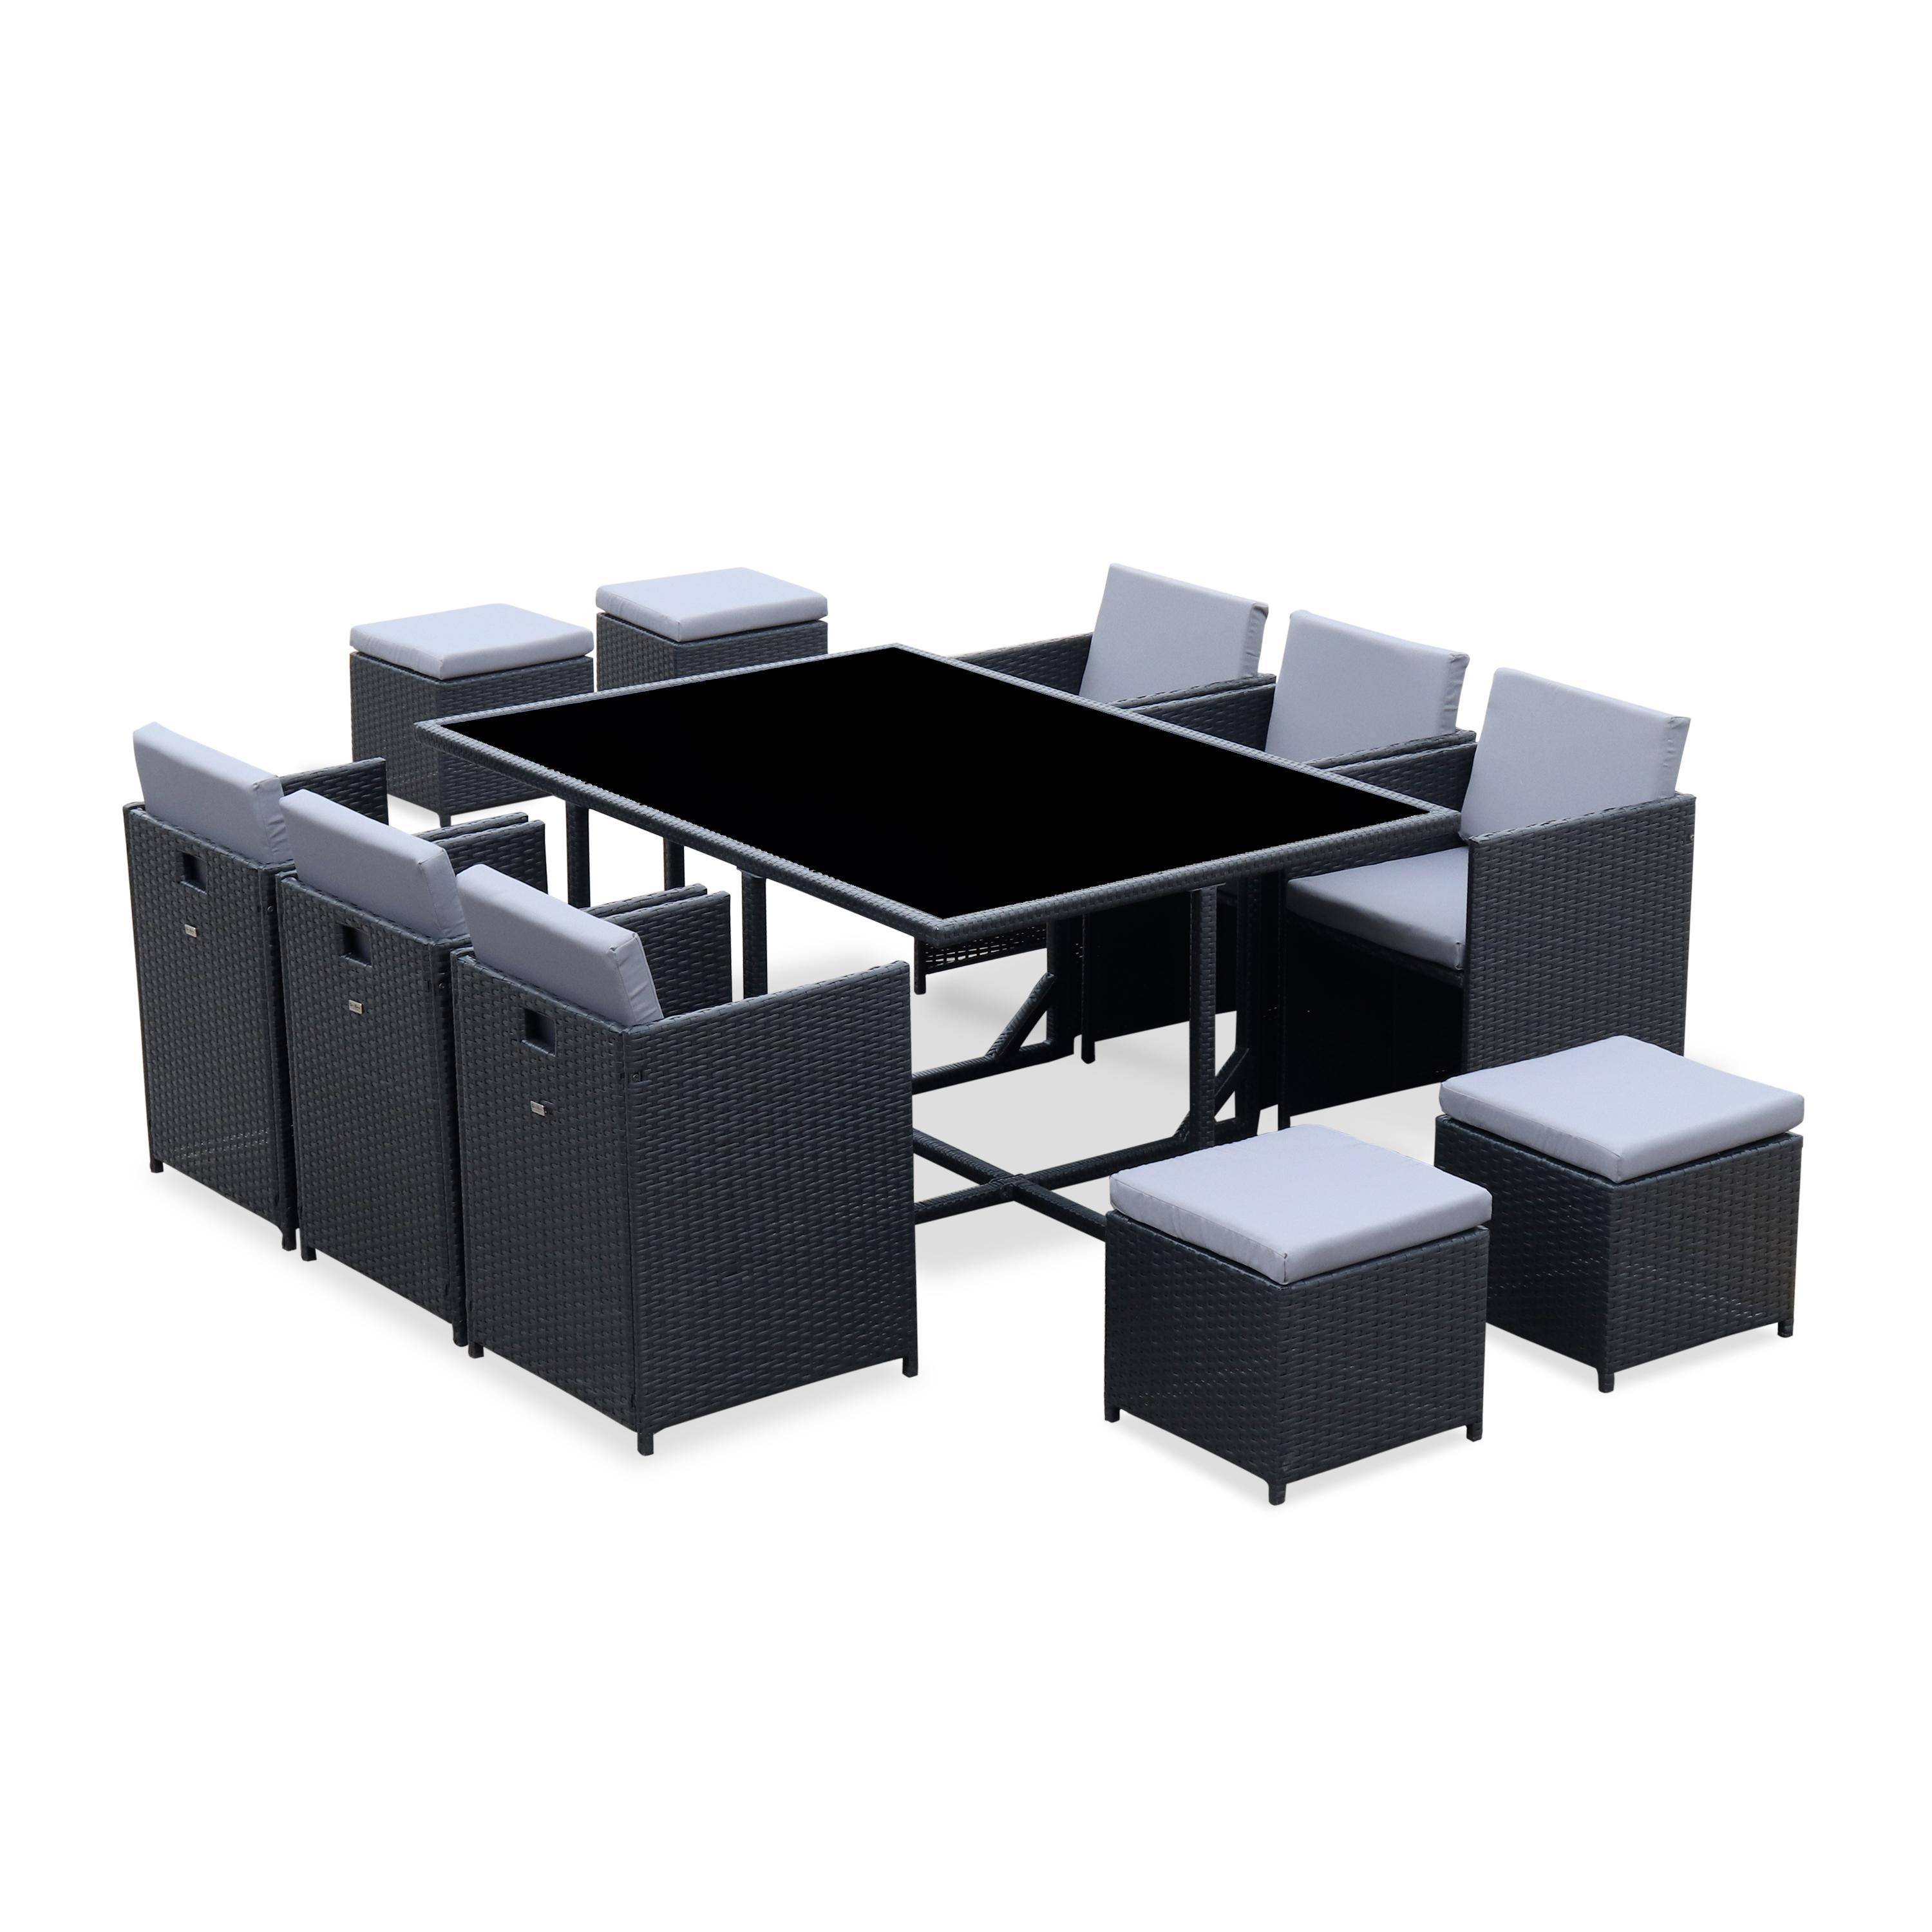 6 to 10-seater rattan cube table set - table, 6 armchairs, 2 footstools - Vabo 10 - Black rattan, Grey cushions,sweeek,Photo2